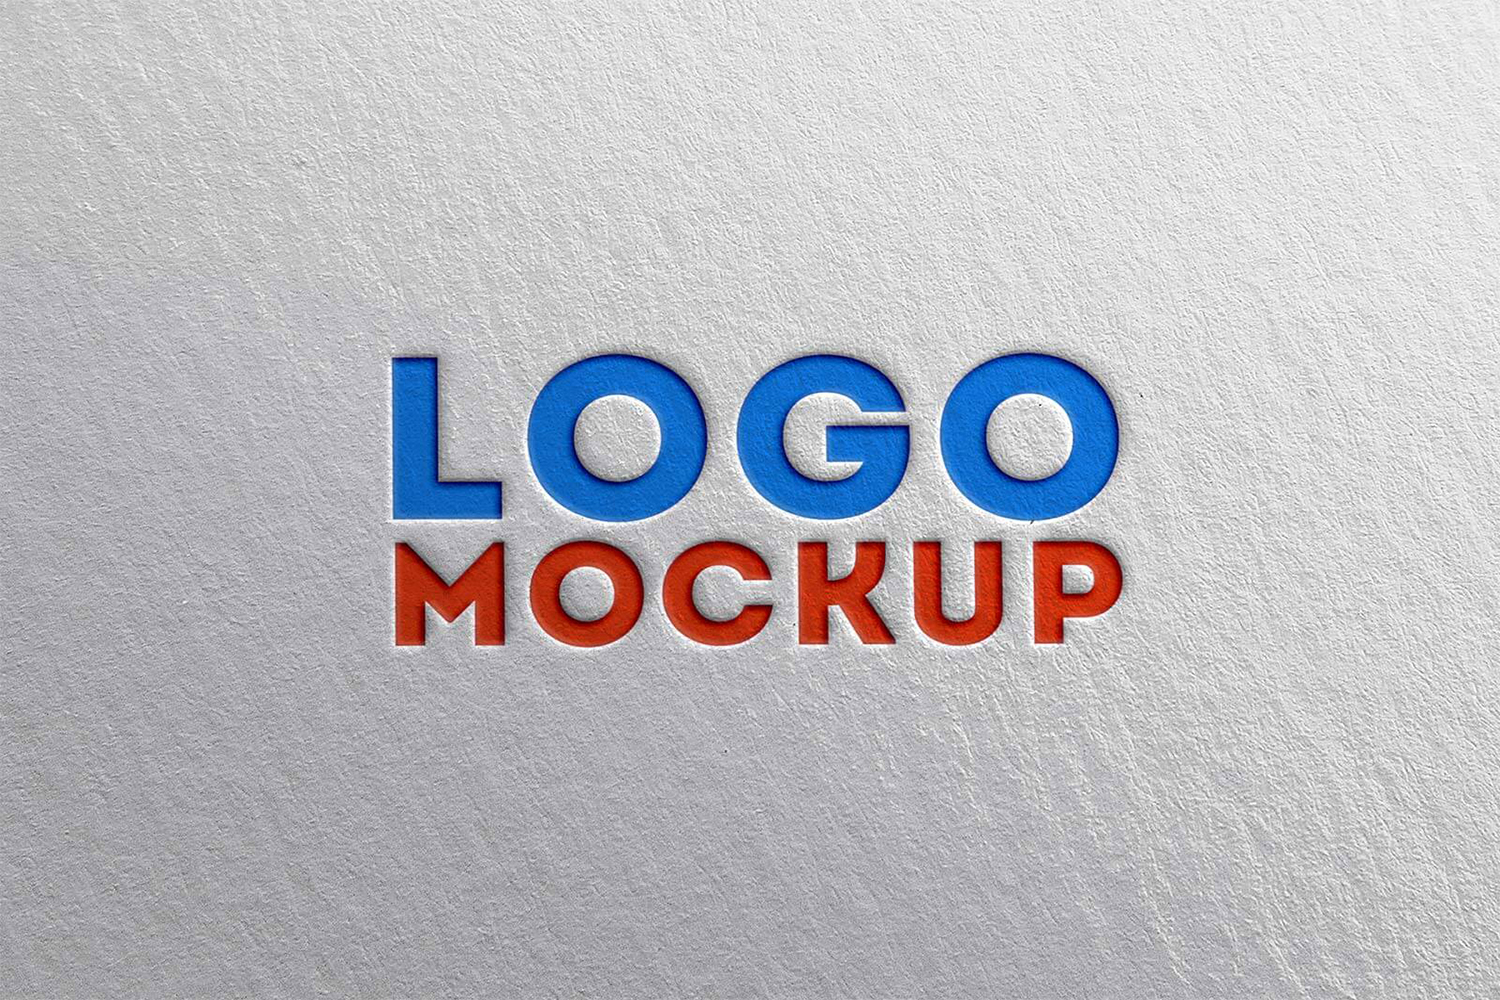 Texture Paper Letterpress Logo Mockup Free Download